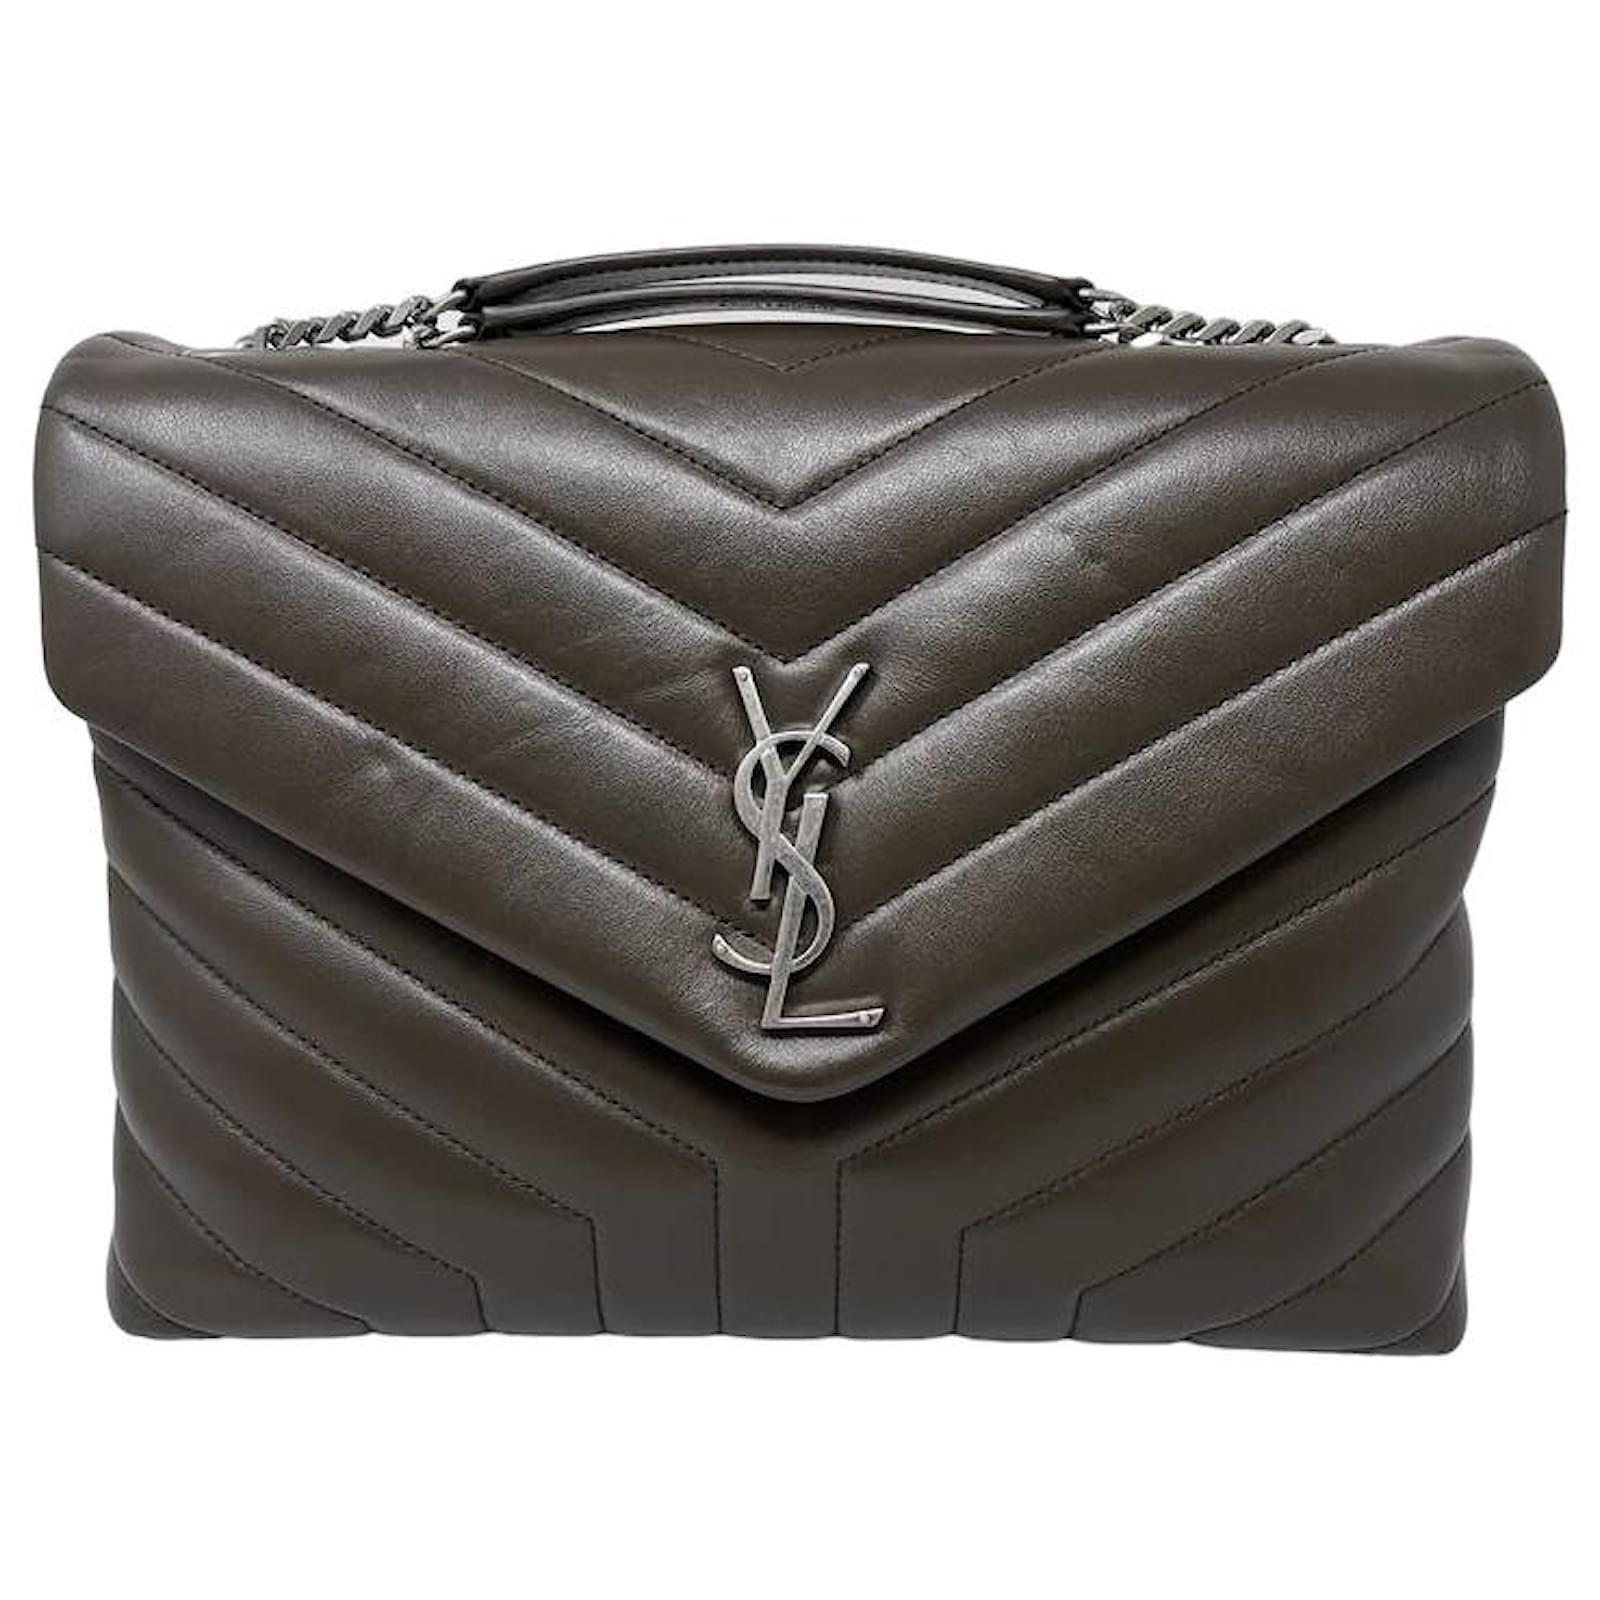 Yves Saint Laurent Handbags for sale in El Paso, Texas | Facebook  Marketplace | Facebook